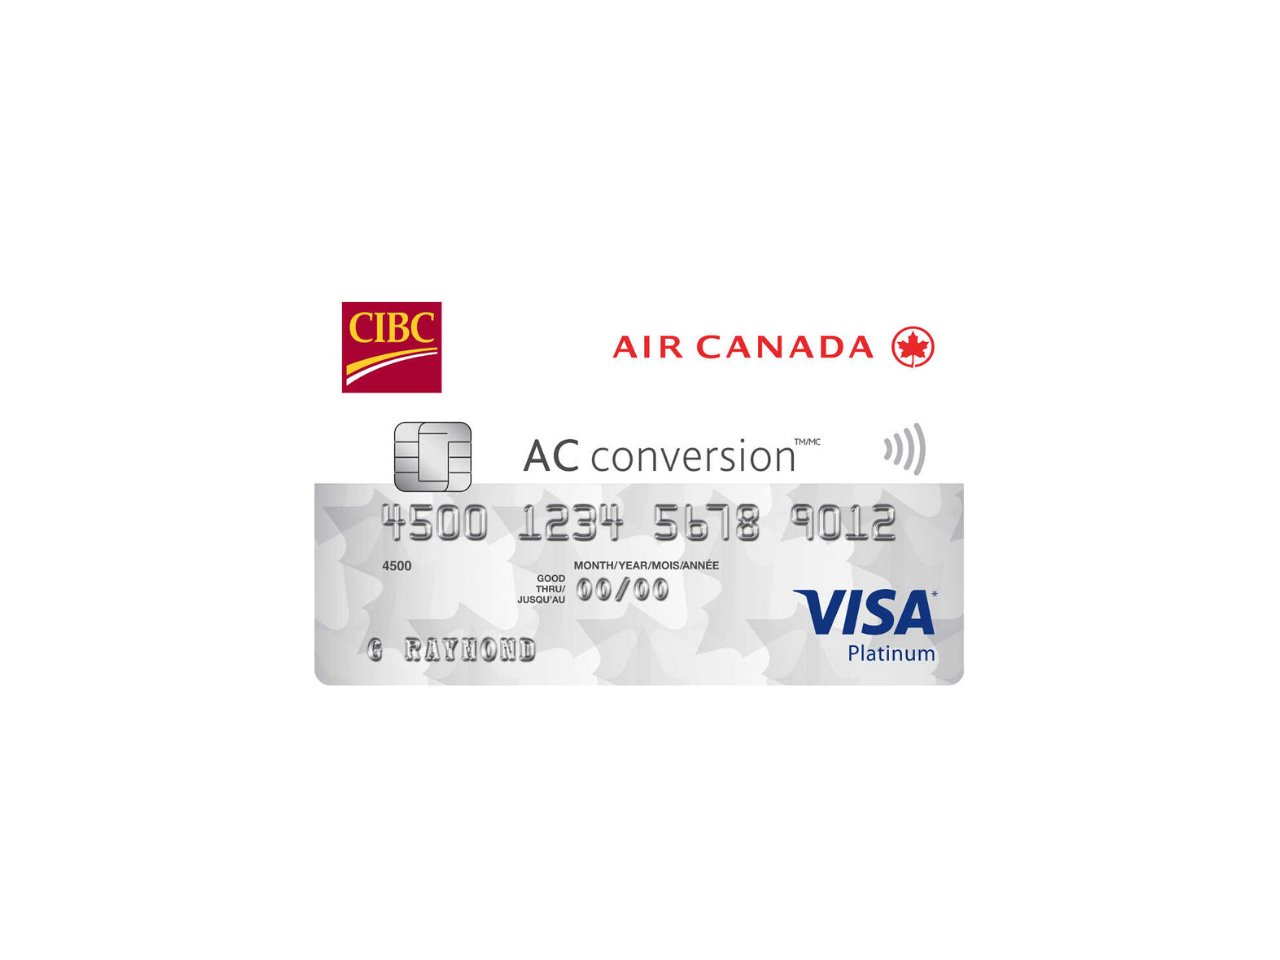 CIBC Card. Банк CIBC кредитная карта. АИР Канада номера бланков. CIBC Debit Card. Предоплаченная карта visa